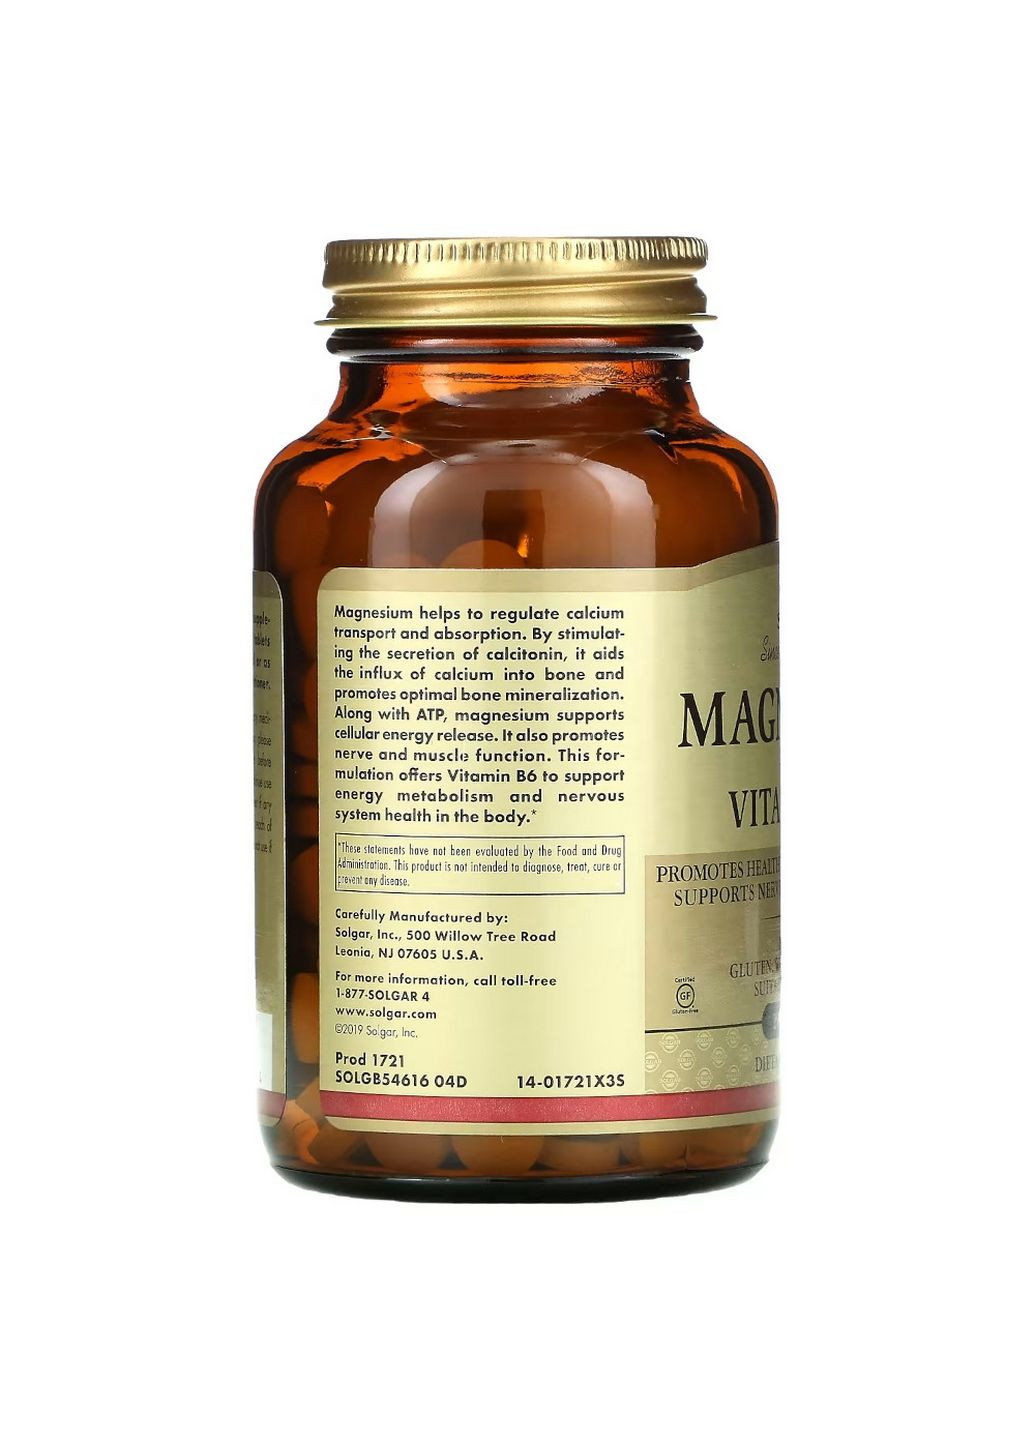 Витамины и минералы Magnesium with Vitamin B6, 250 таблеток Solgar (293338992)